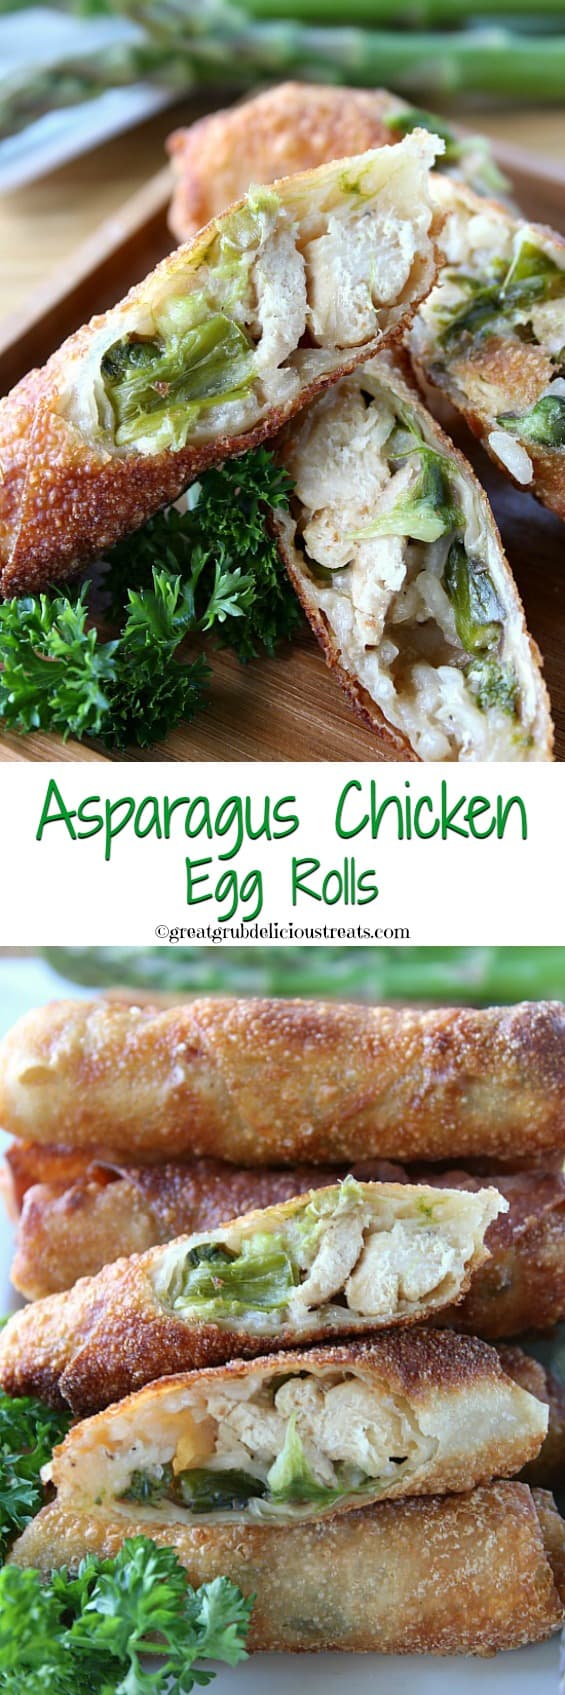 Asparagus Chicken Egg Rolls